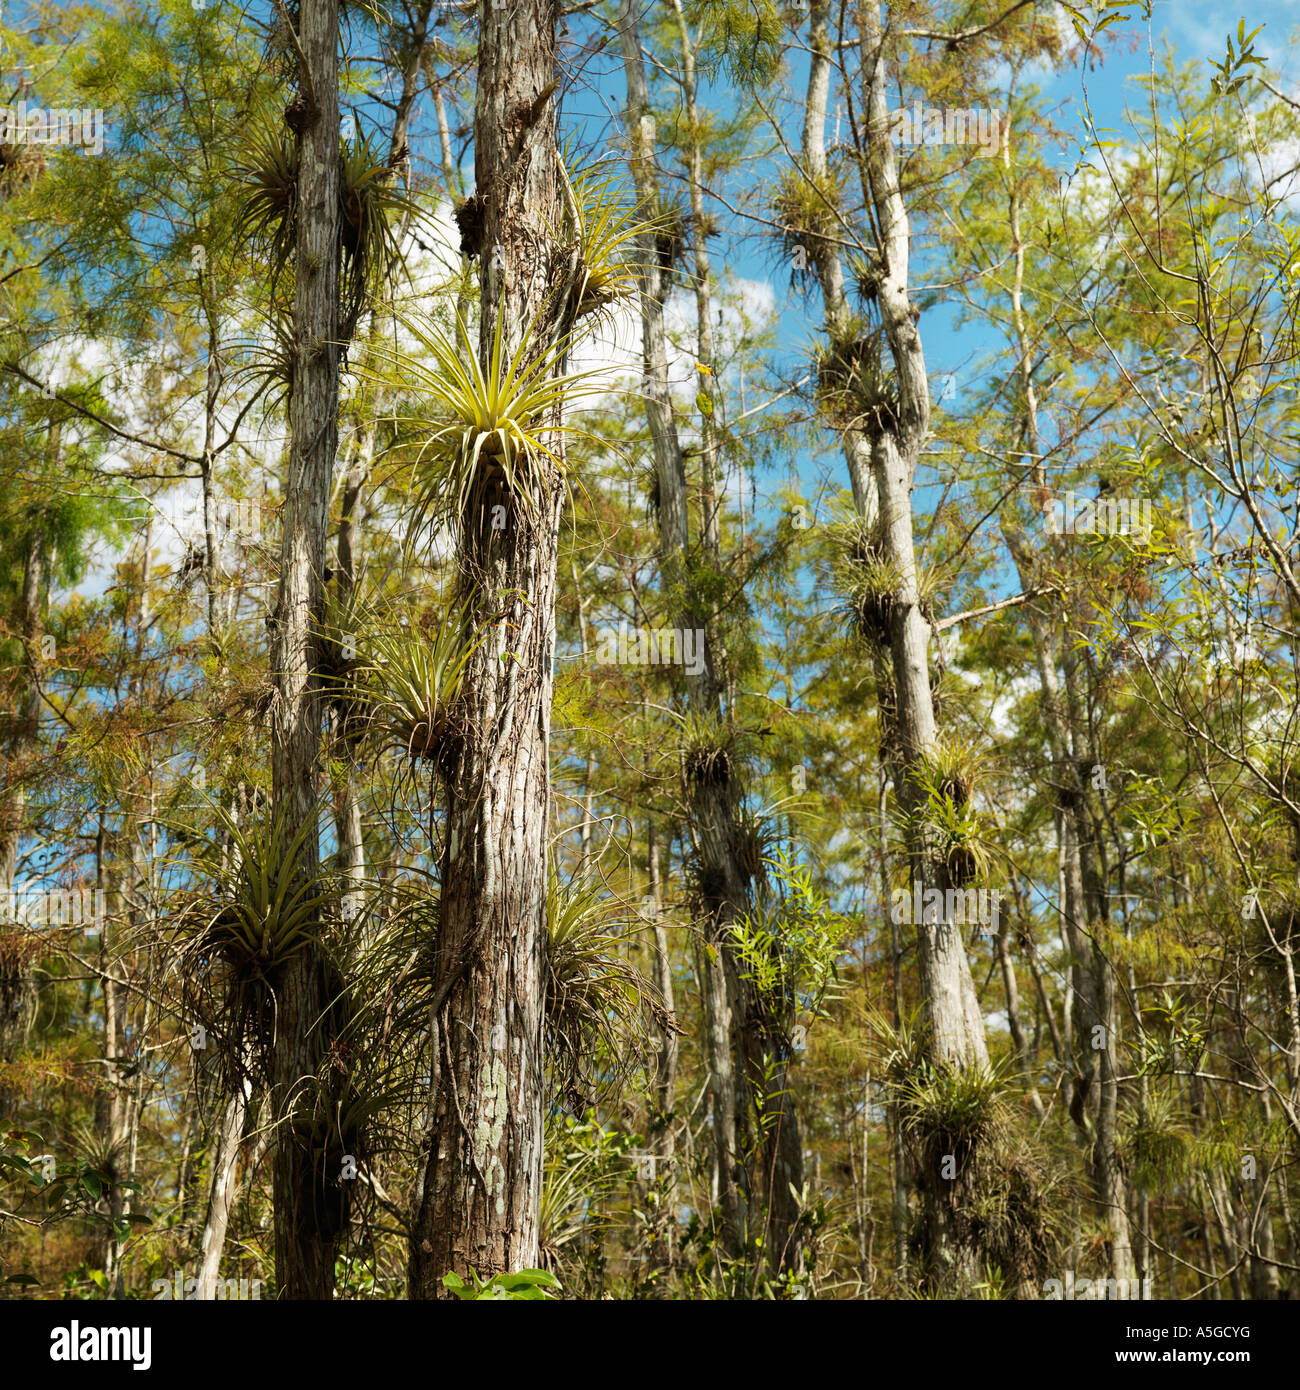 Wetland in Florida Everglades. Stock Photo